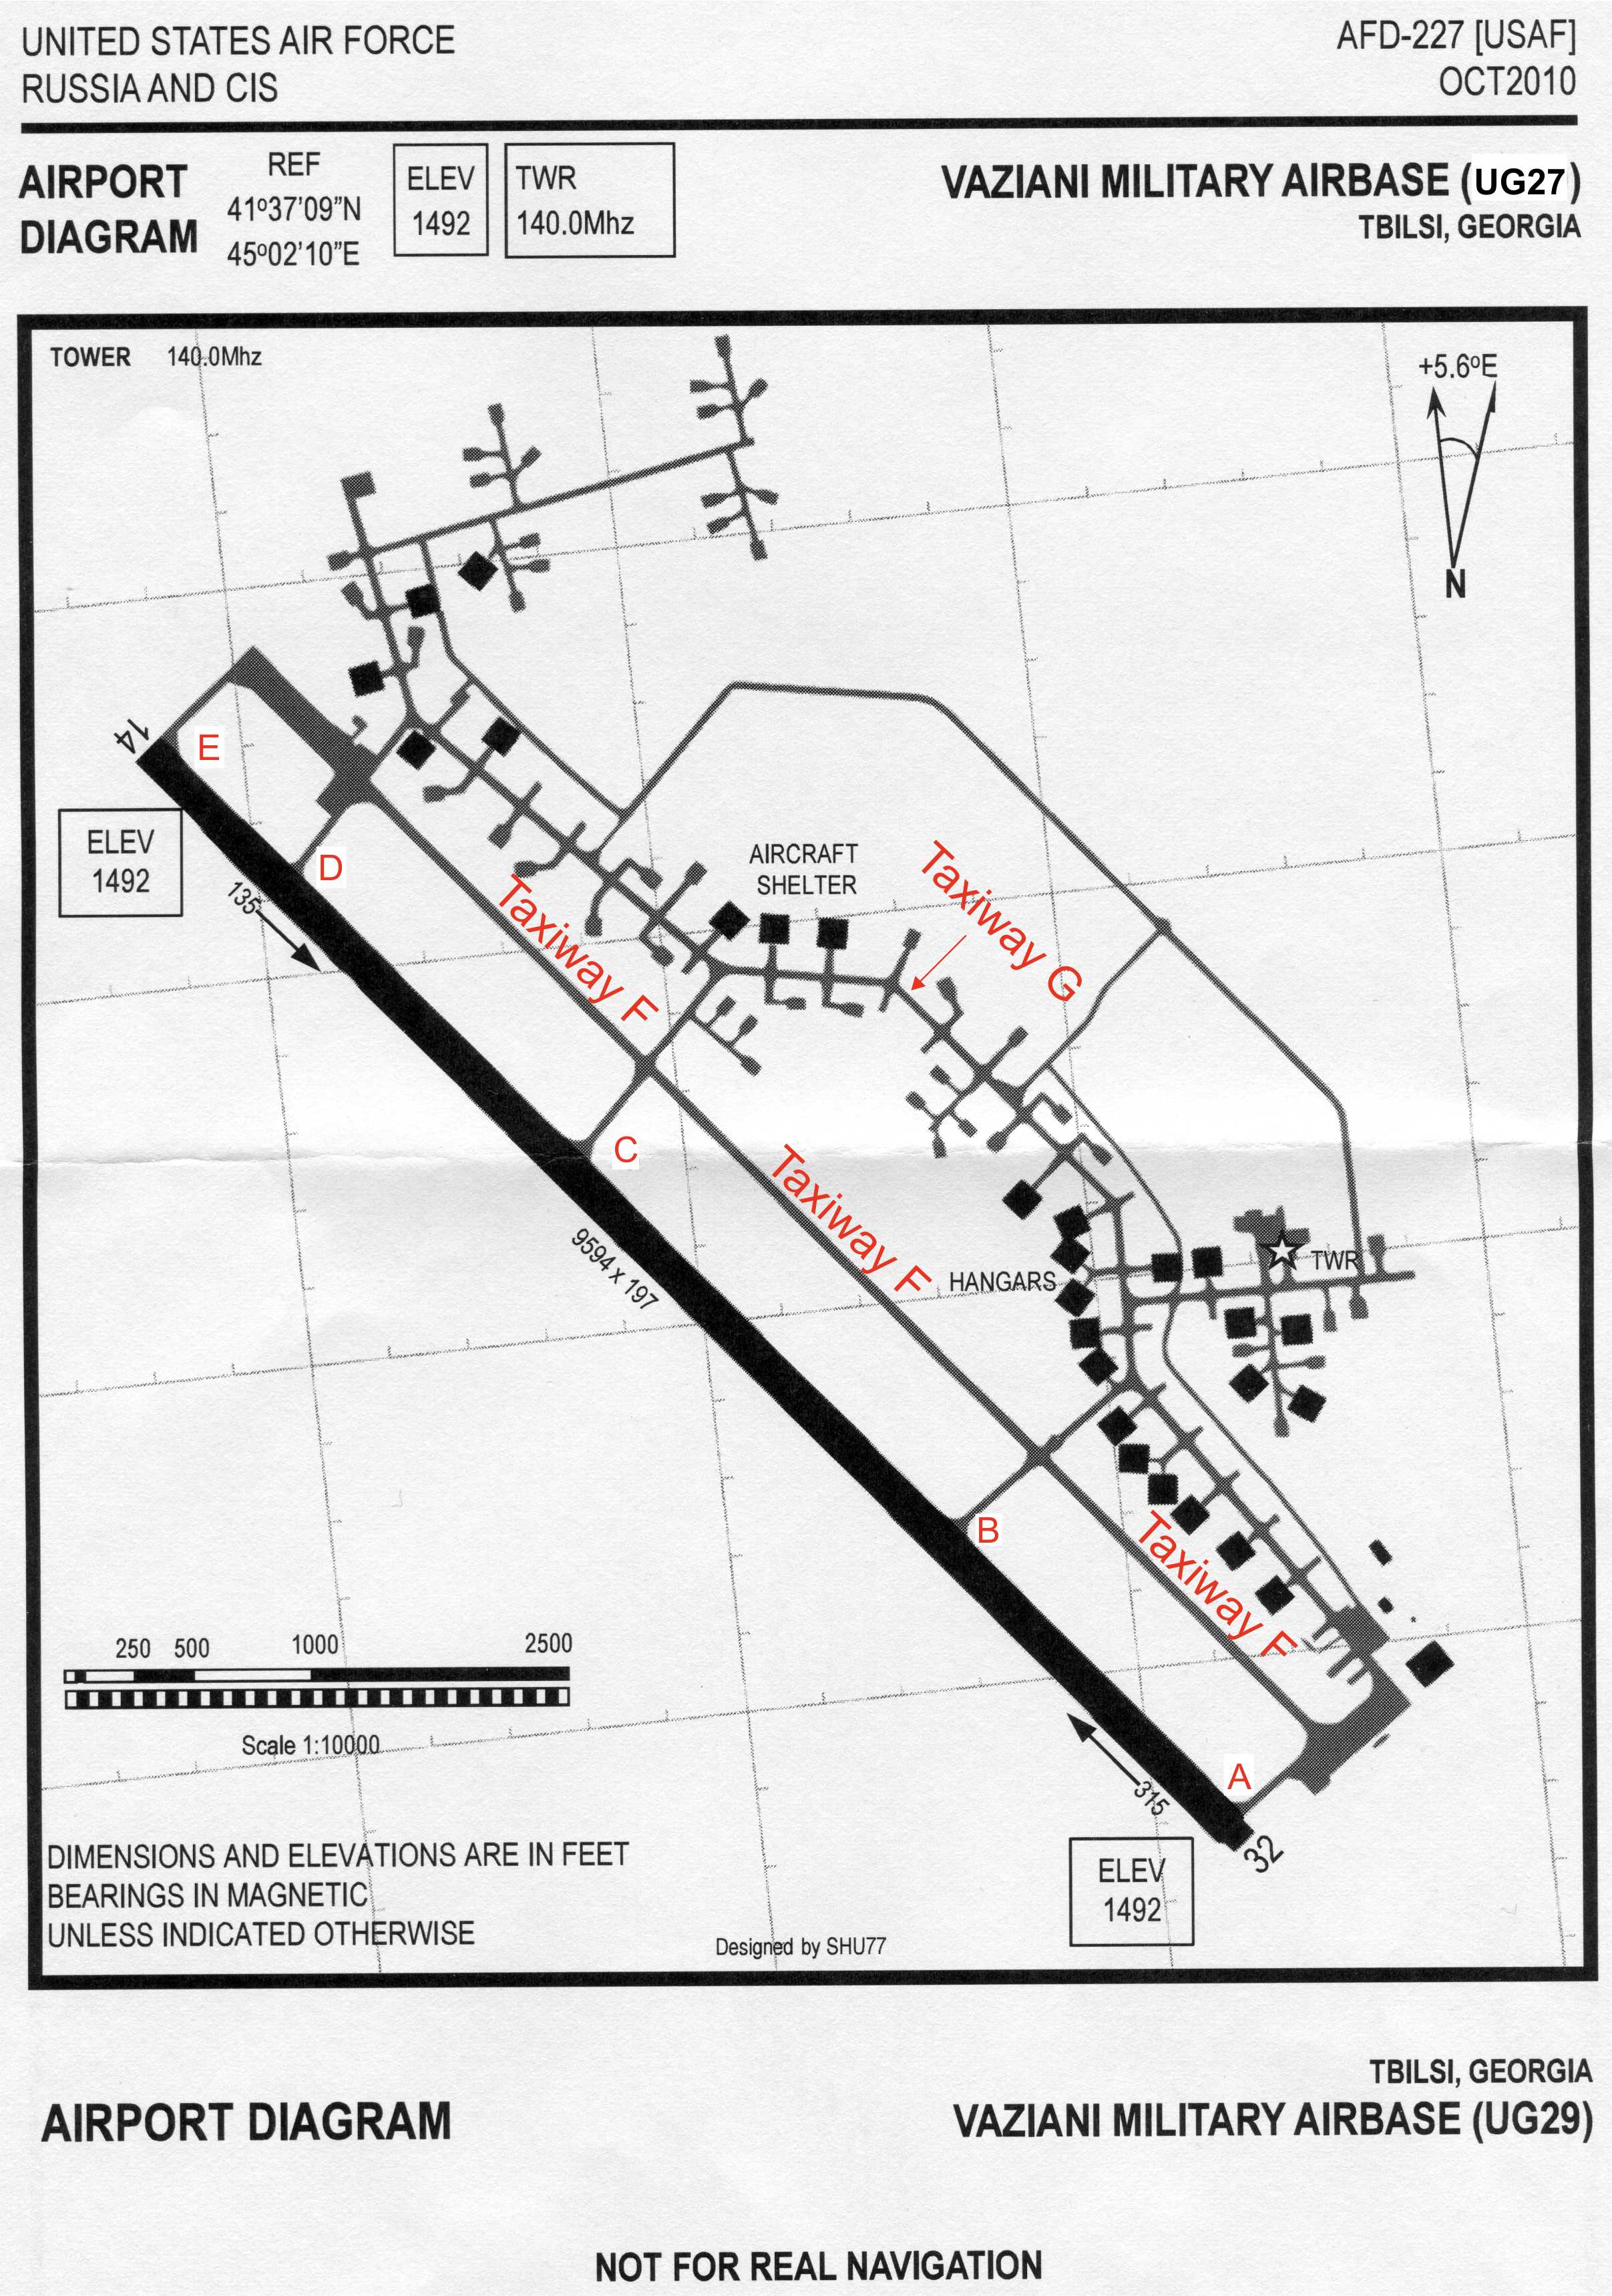 Vaziani airport layout.jpg